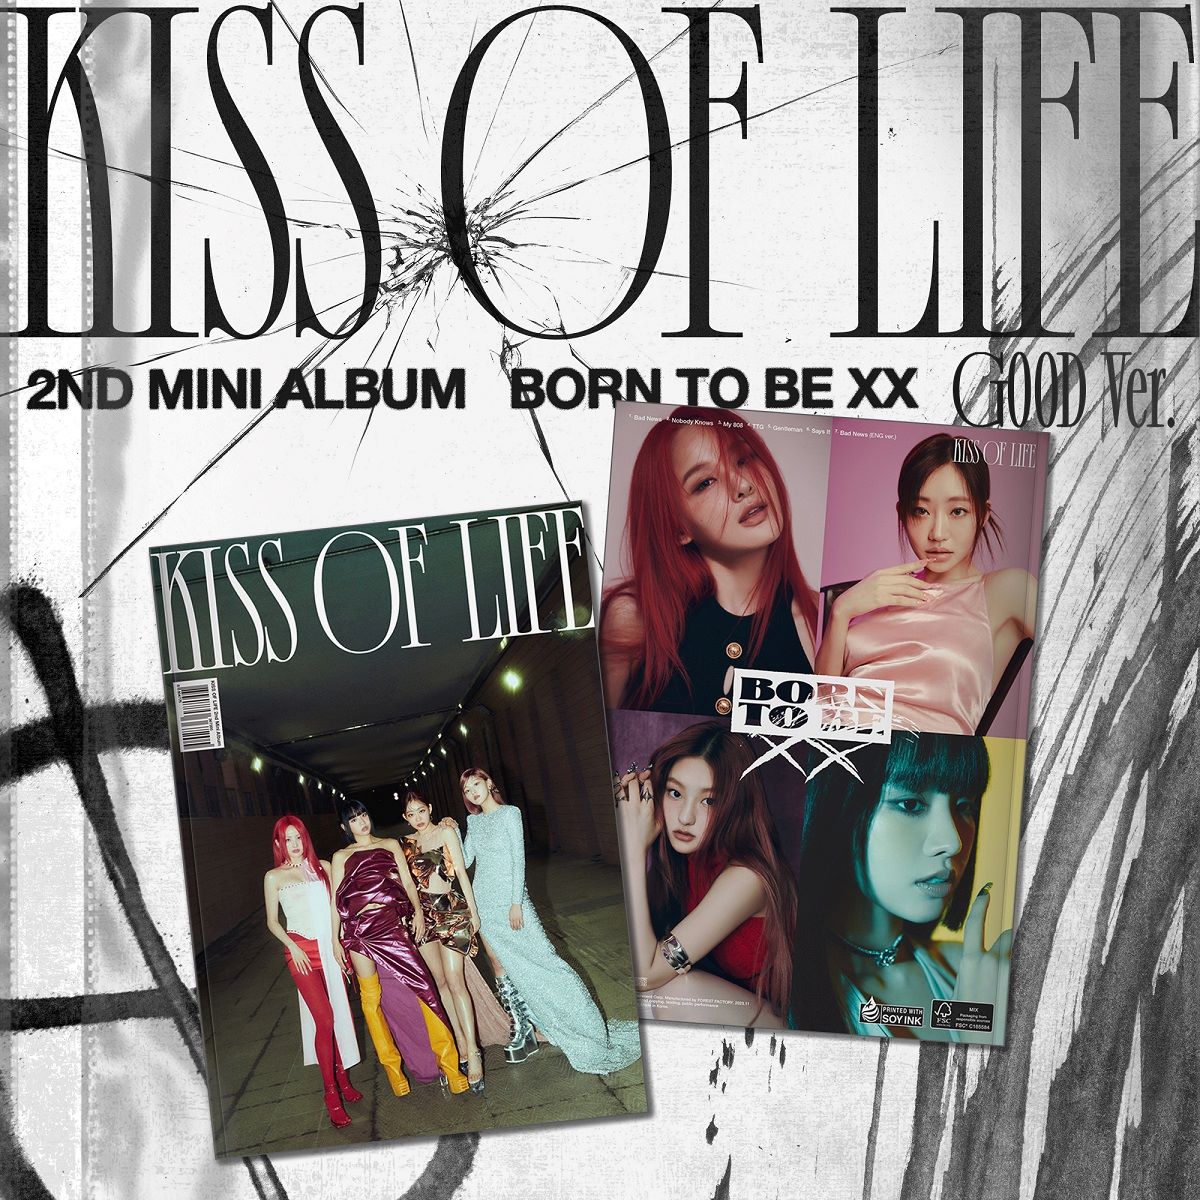 KISS OF LIFE - 미니 2집 [Born to be XX] (Good Ver.)